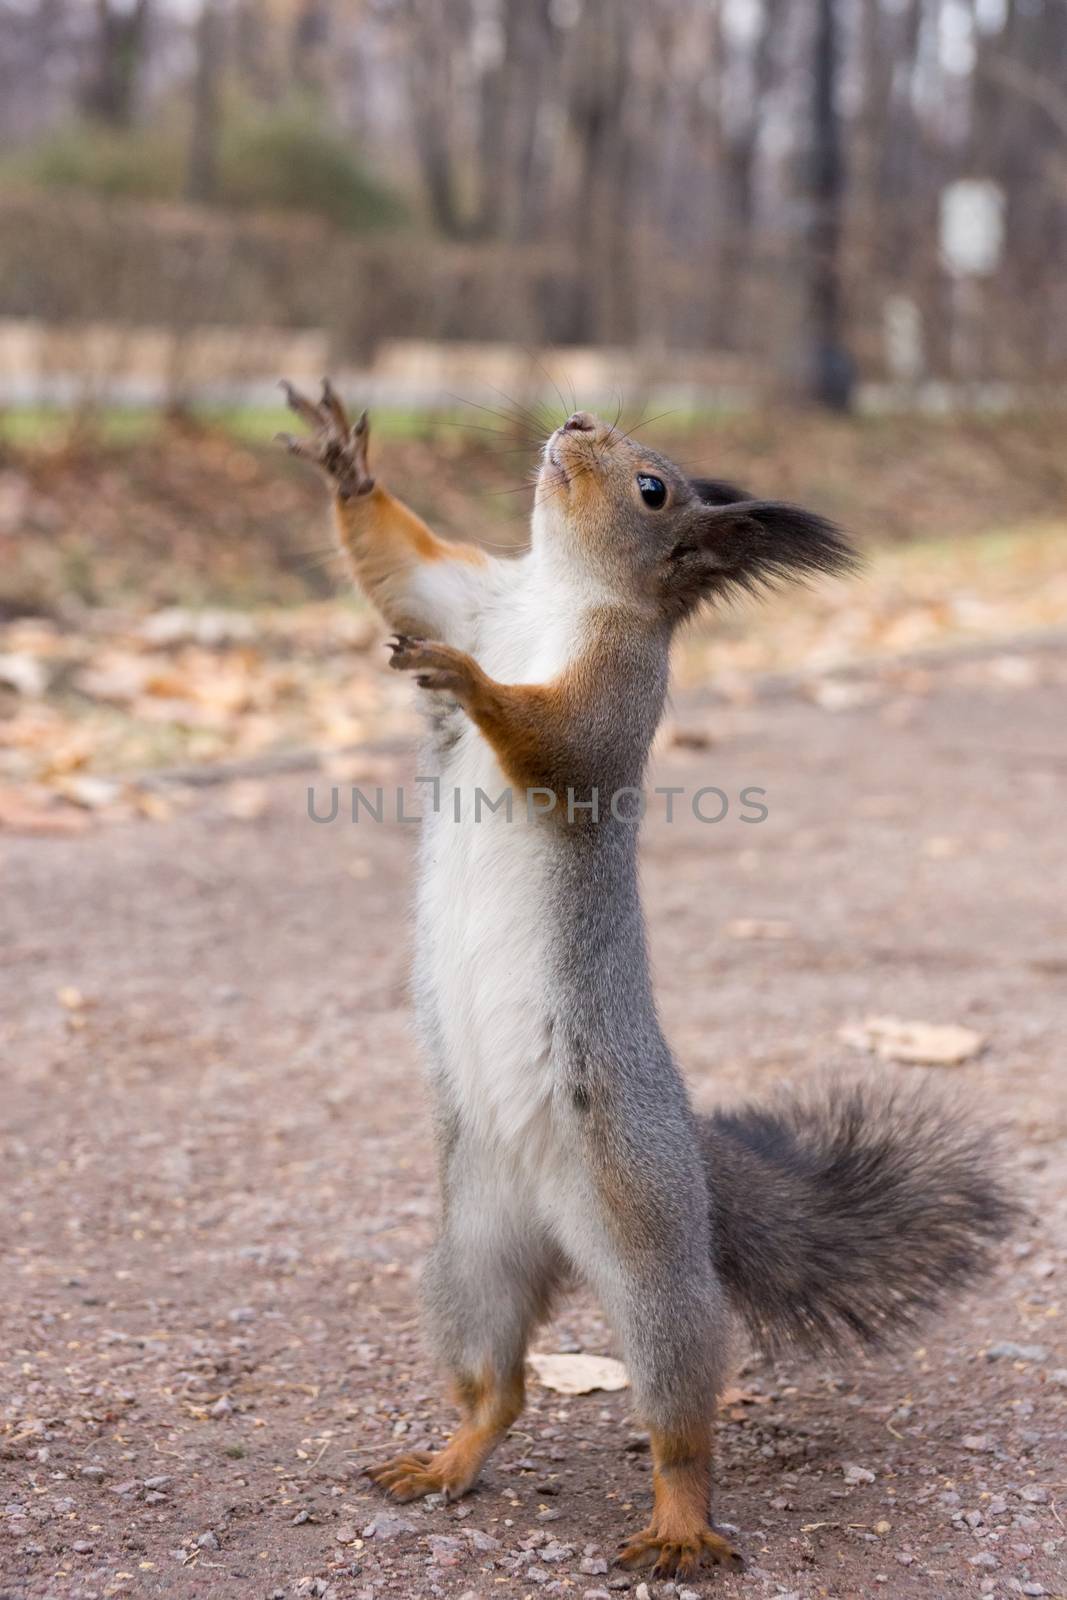 The photograph shows a squirrel Artist